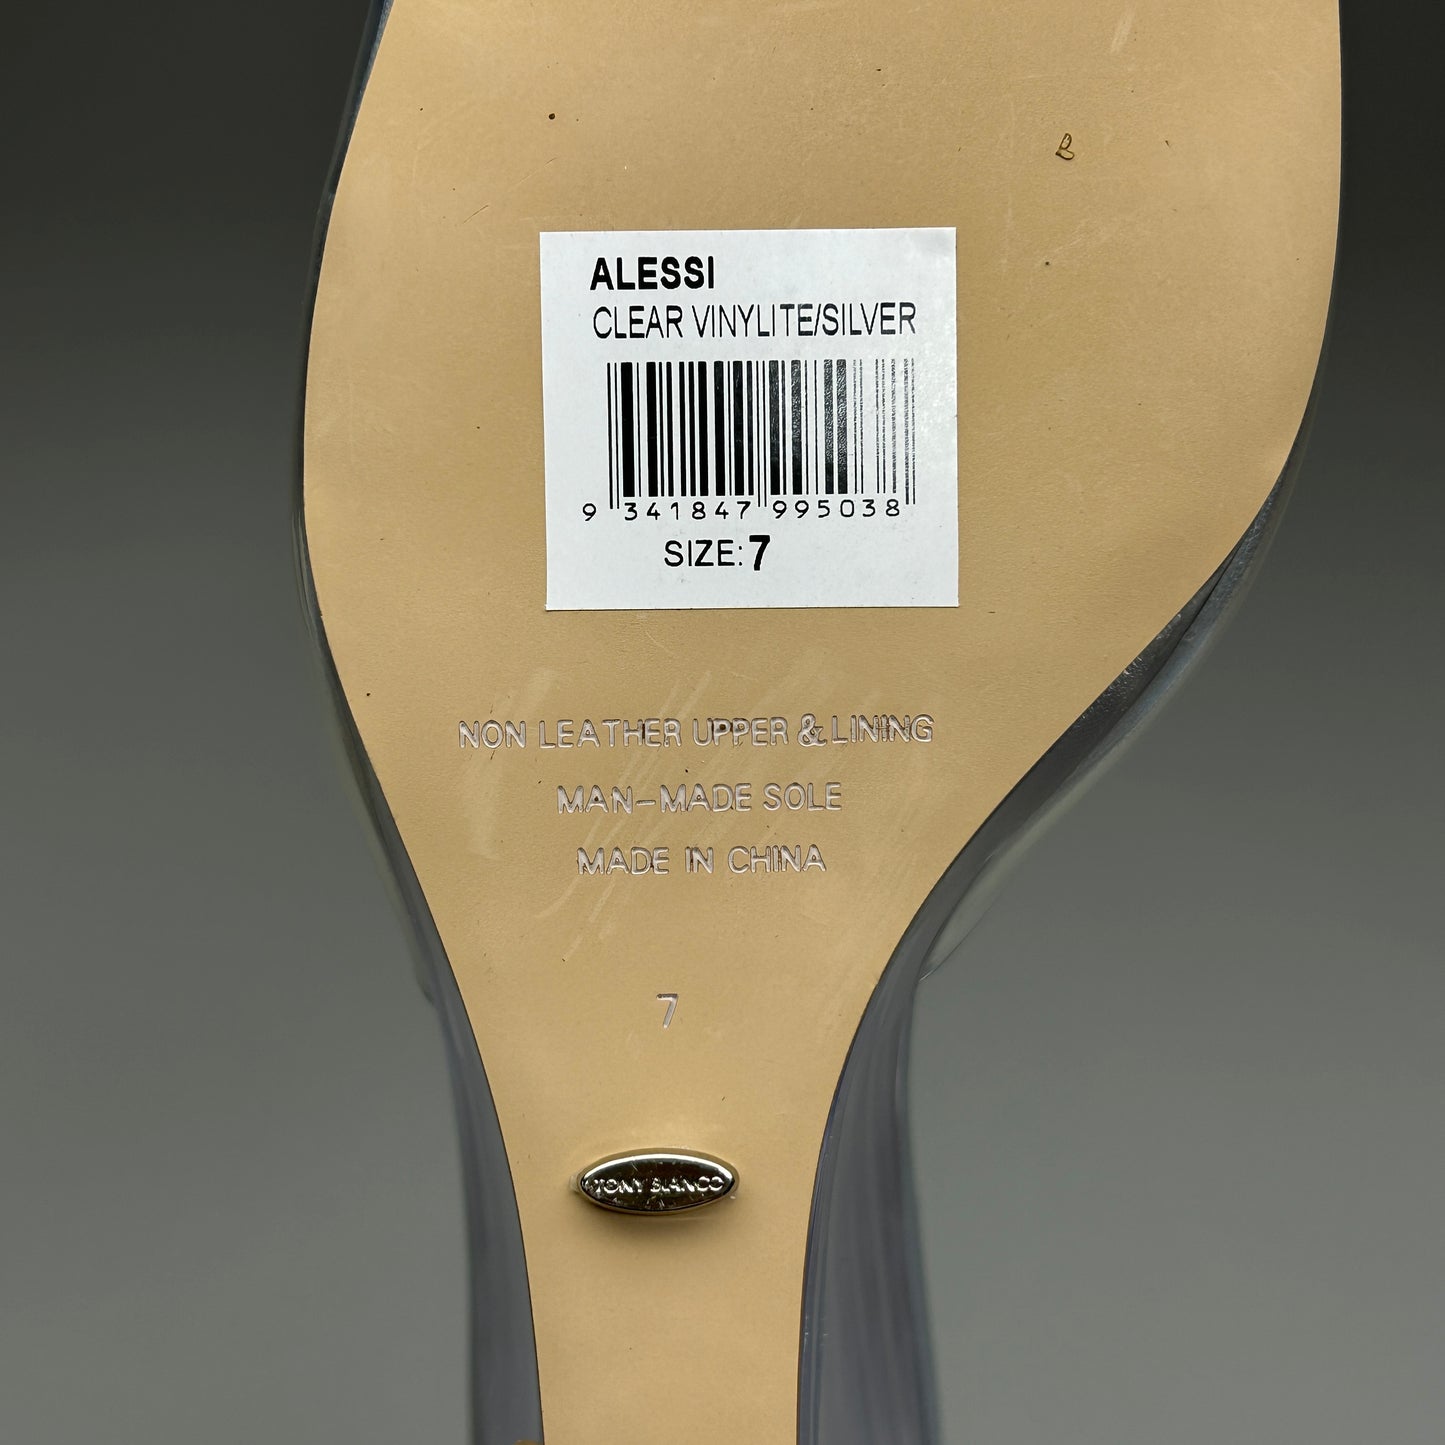 TONY BIANCO Alessi Clear Vinylite/Silver Wedges Women's Heels Sz 7 (New)